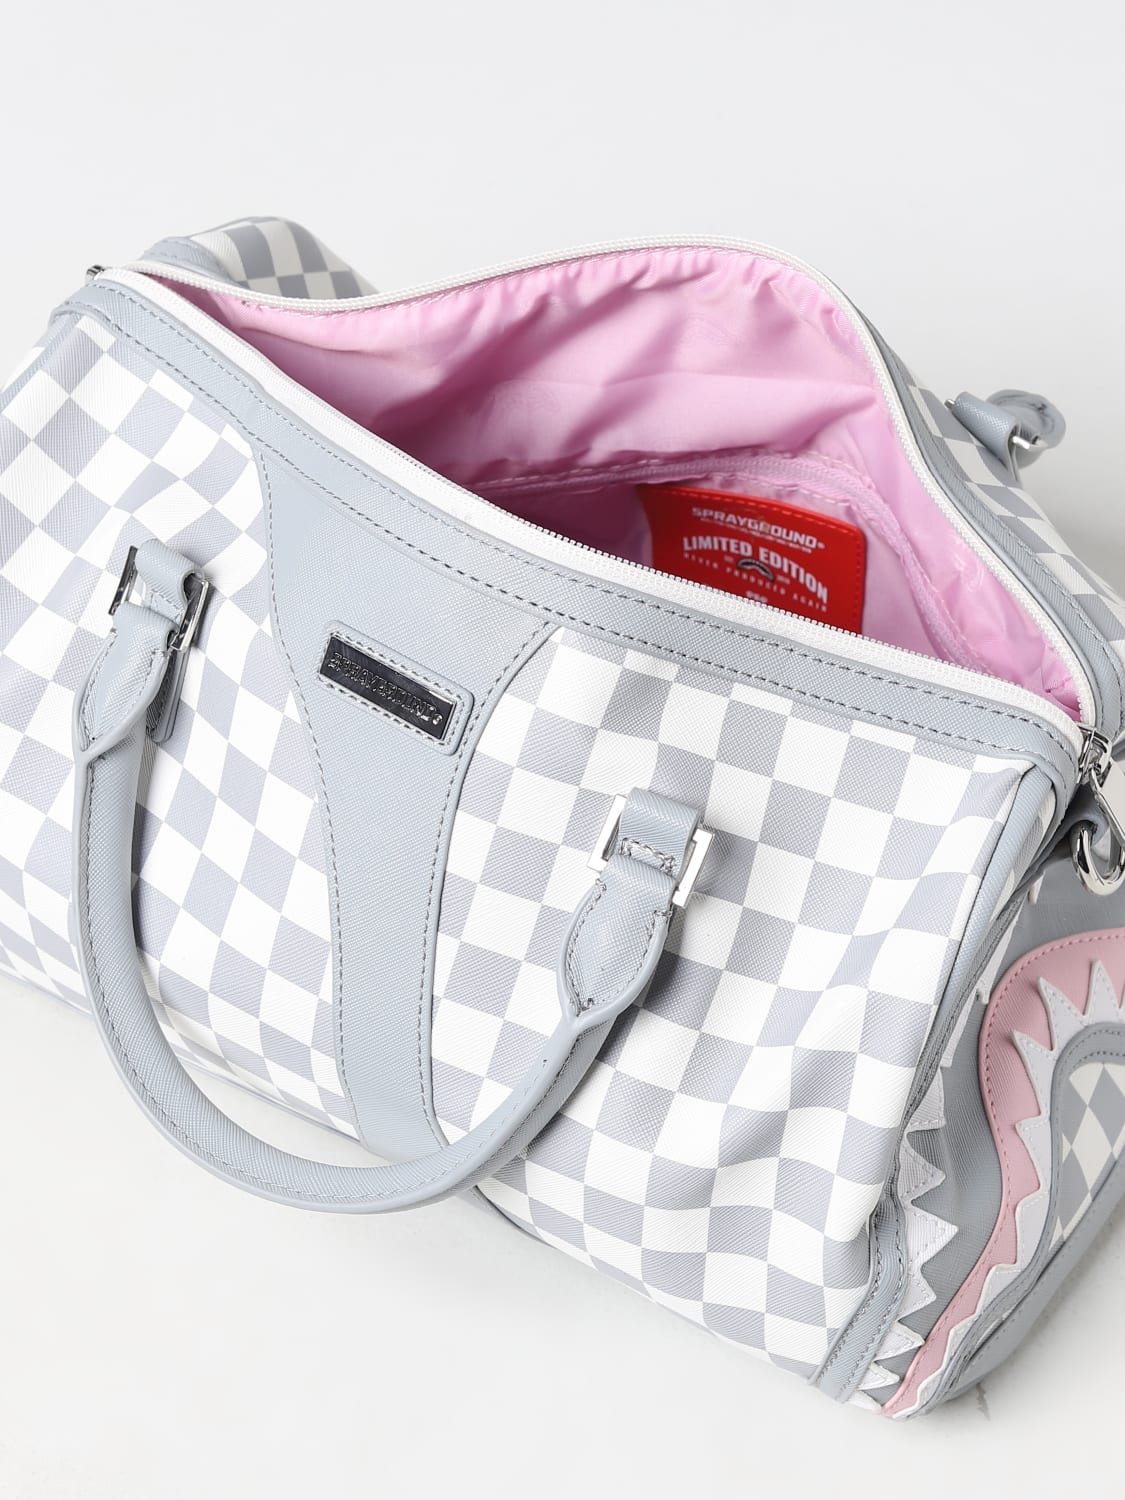 Handbags Sprayground, Style code: 910t4039nsz